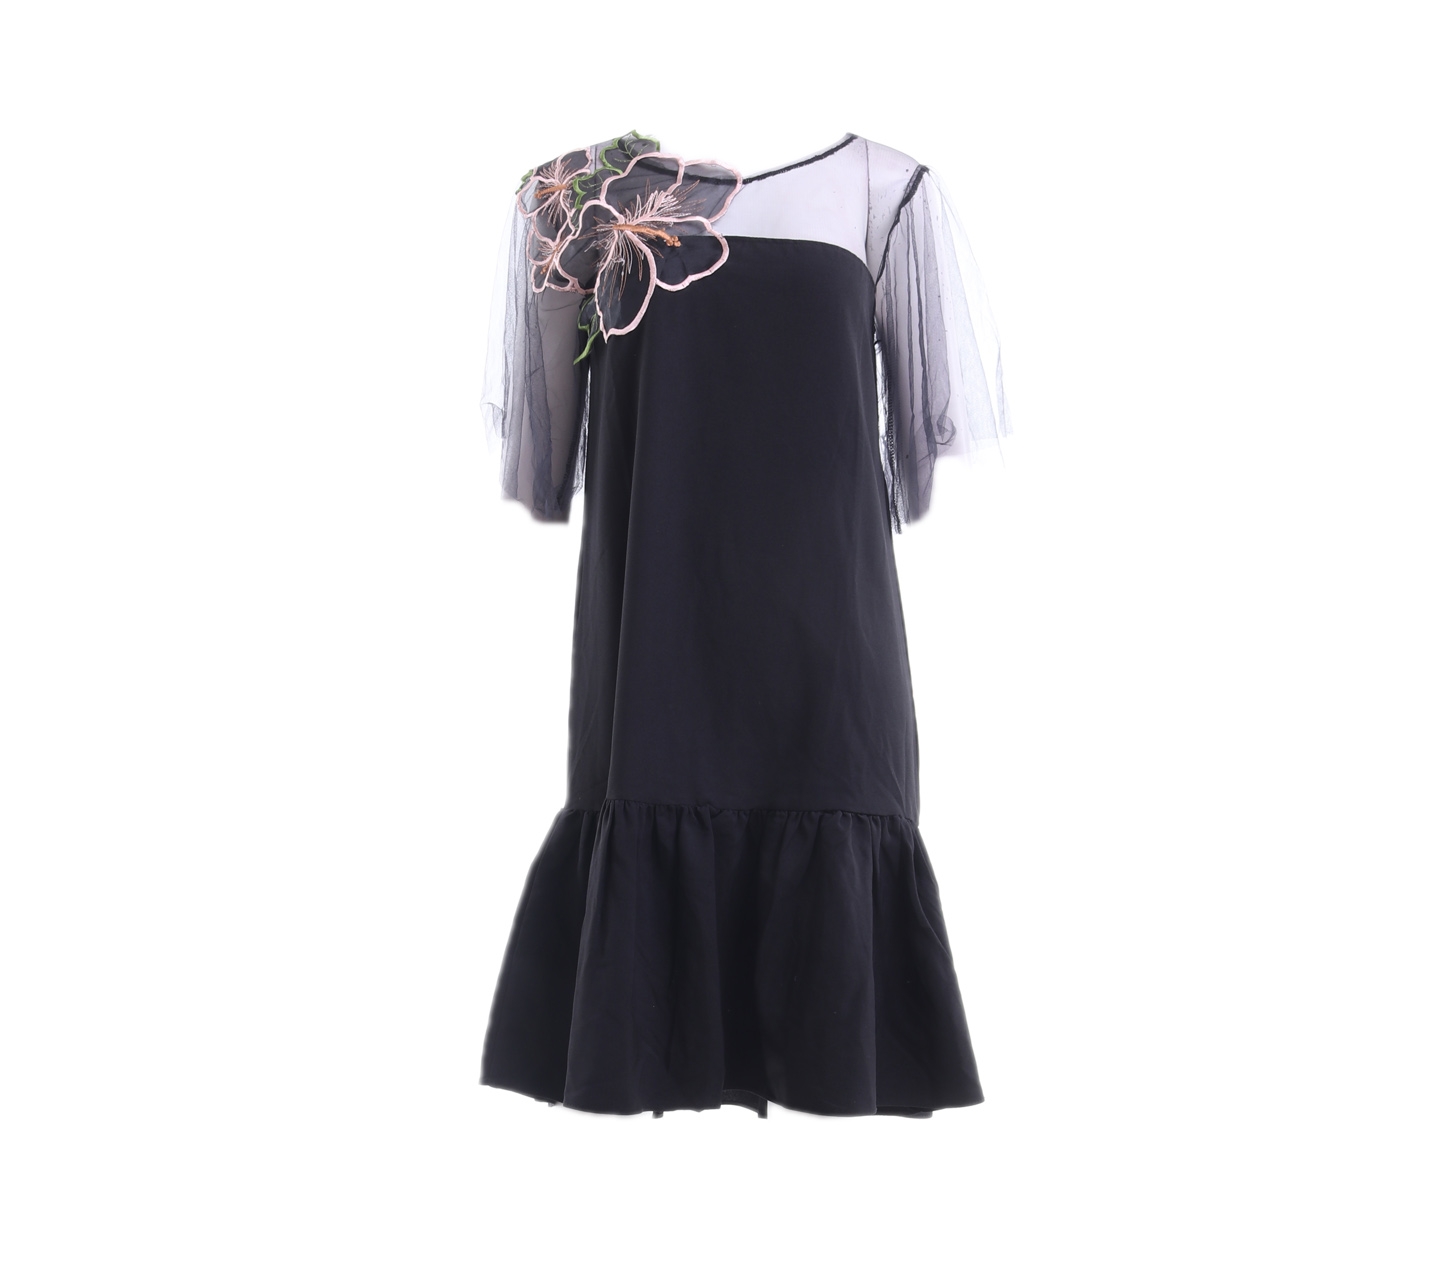 Marie & Frisco Black Sheer Mini Dress